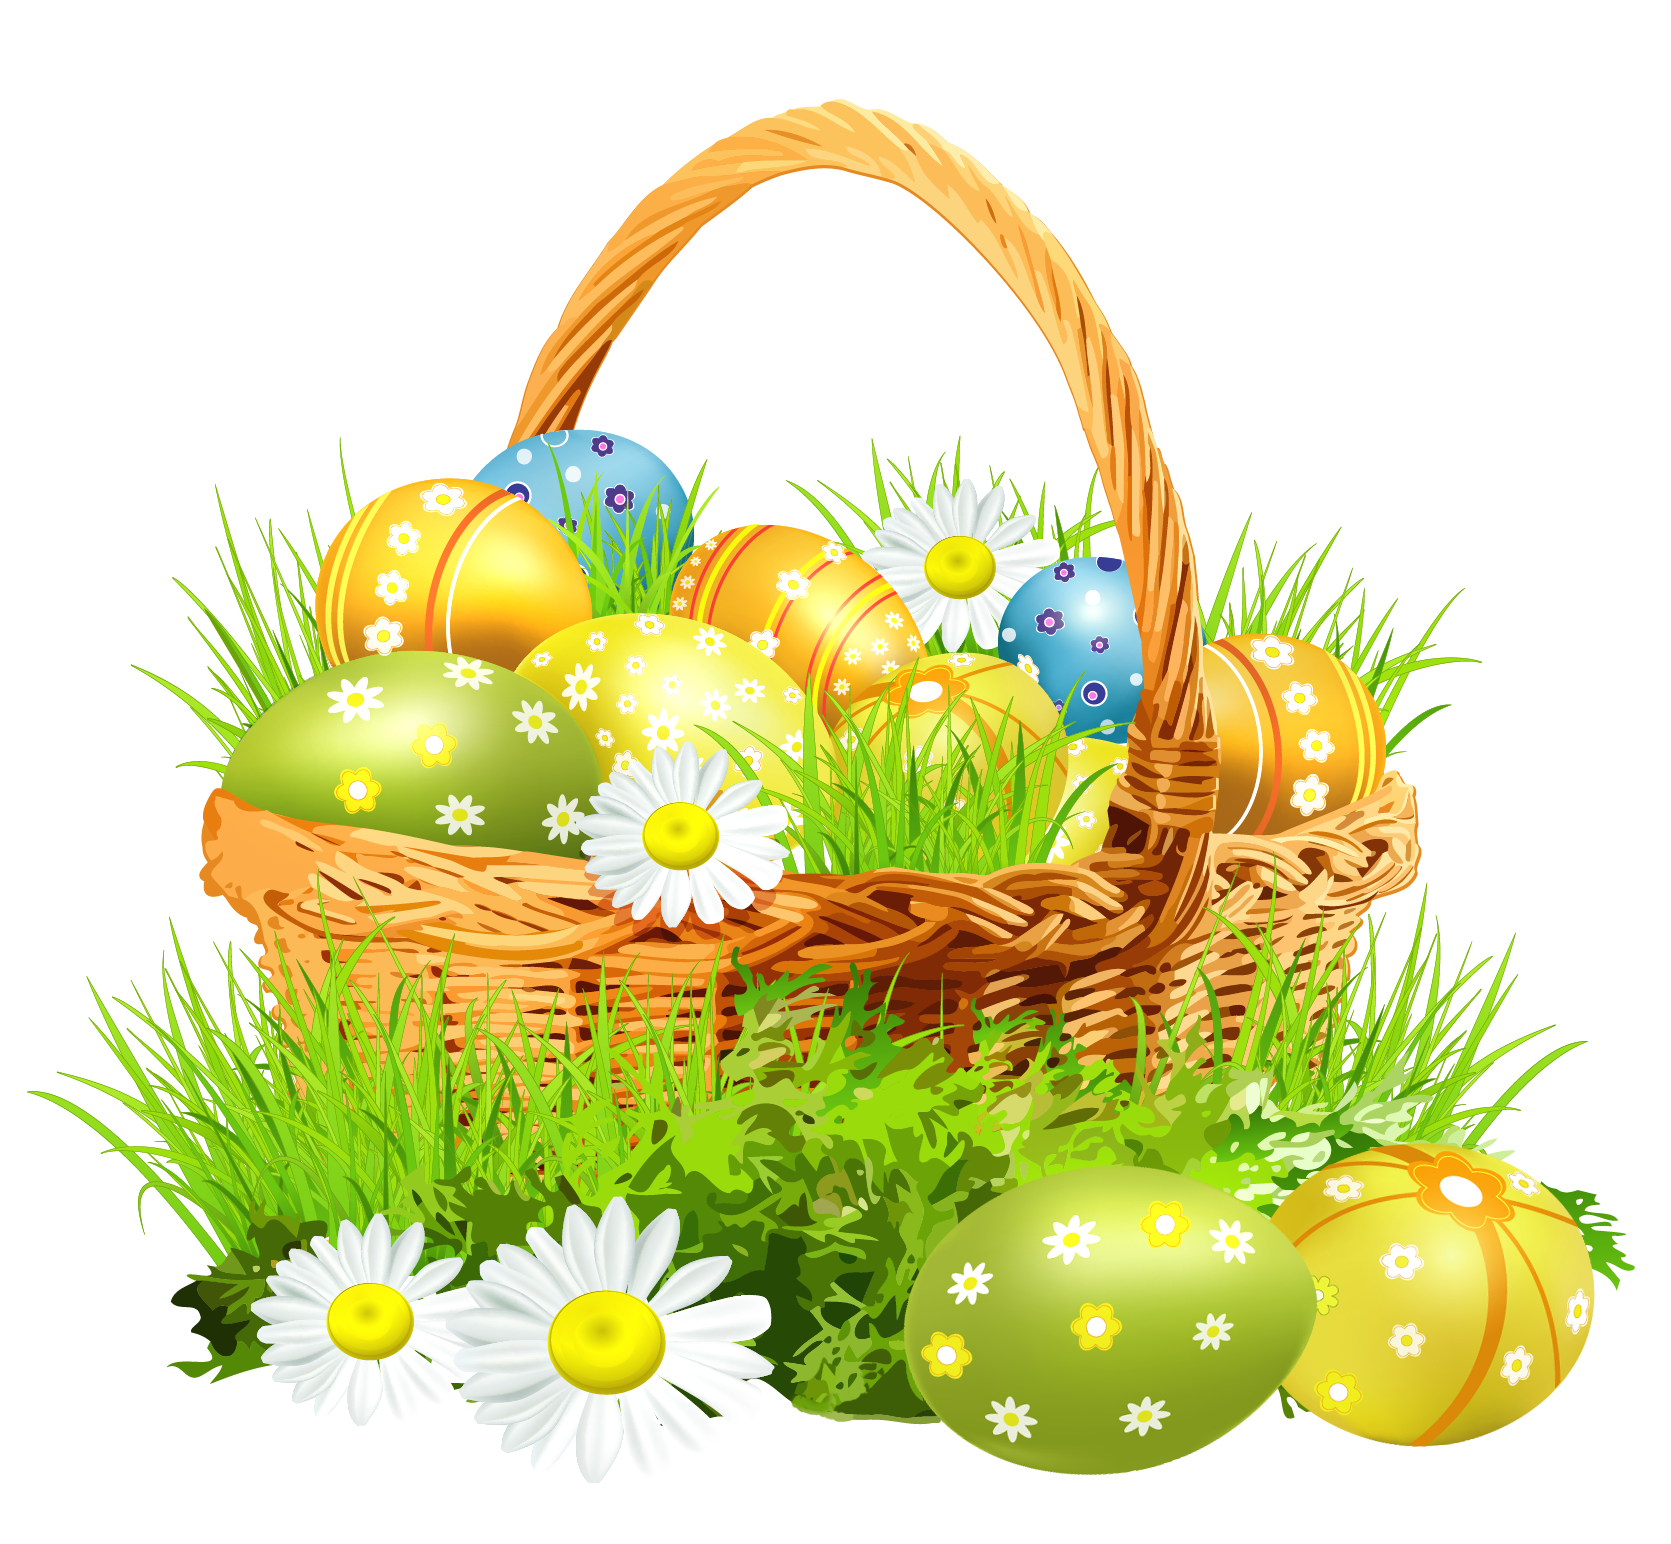 Free Easter Basket Pics, Download Free Easter Basket Pics png images